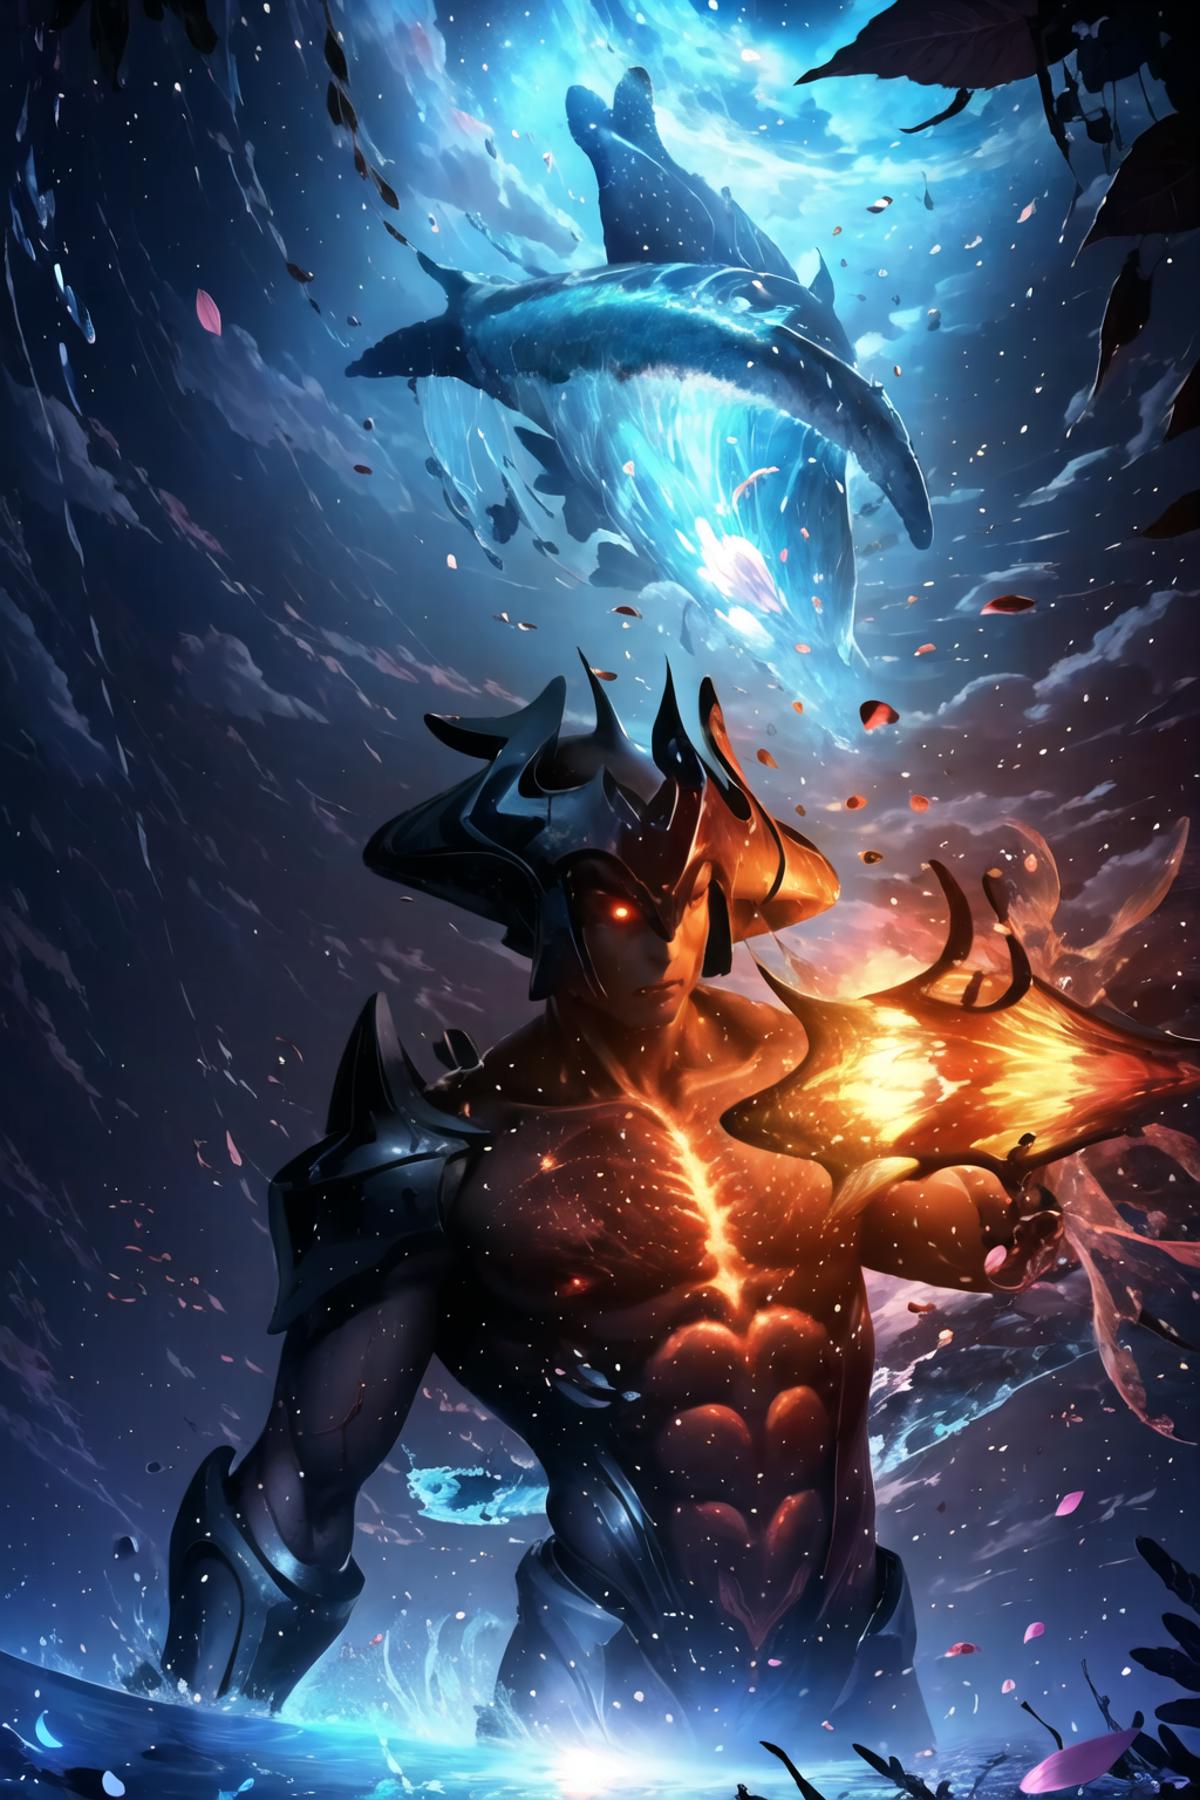 Aatrox the Darkin Blade | League of Legends | Lora image by FallenIncursio